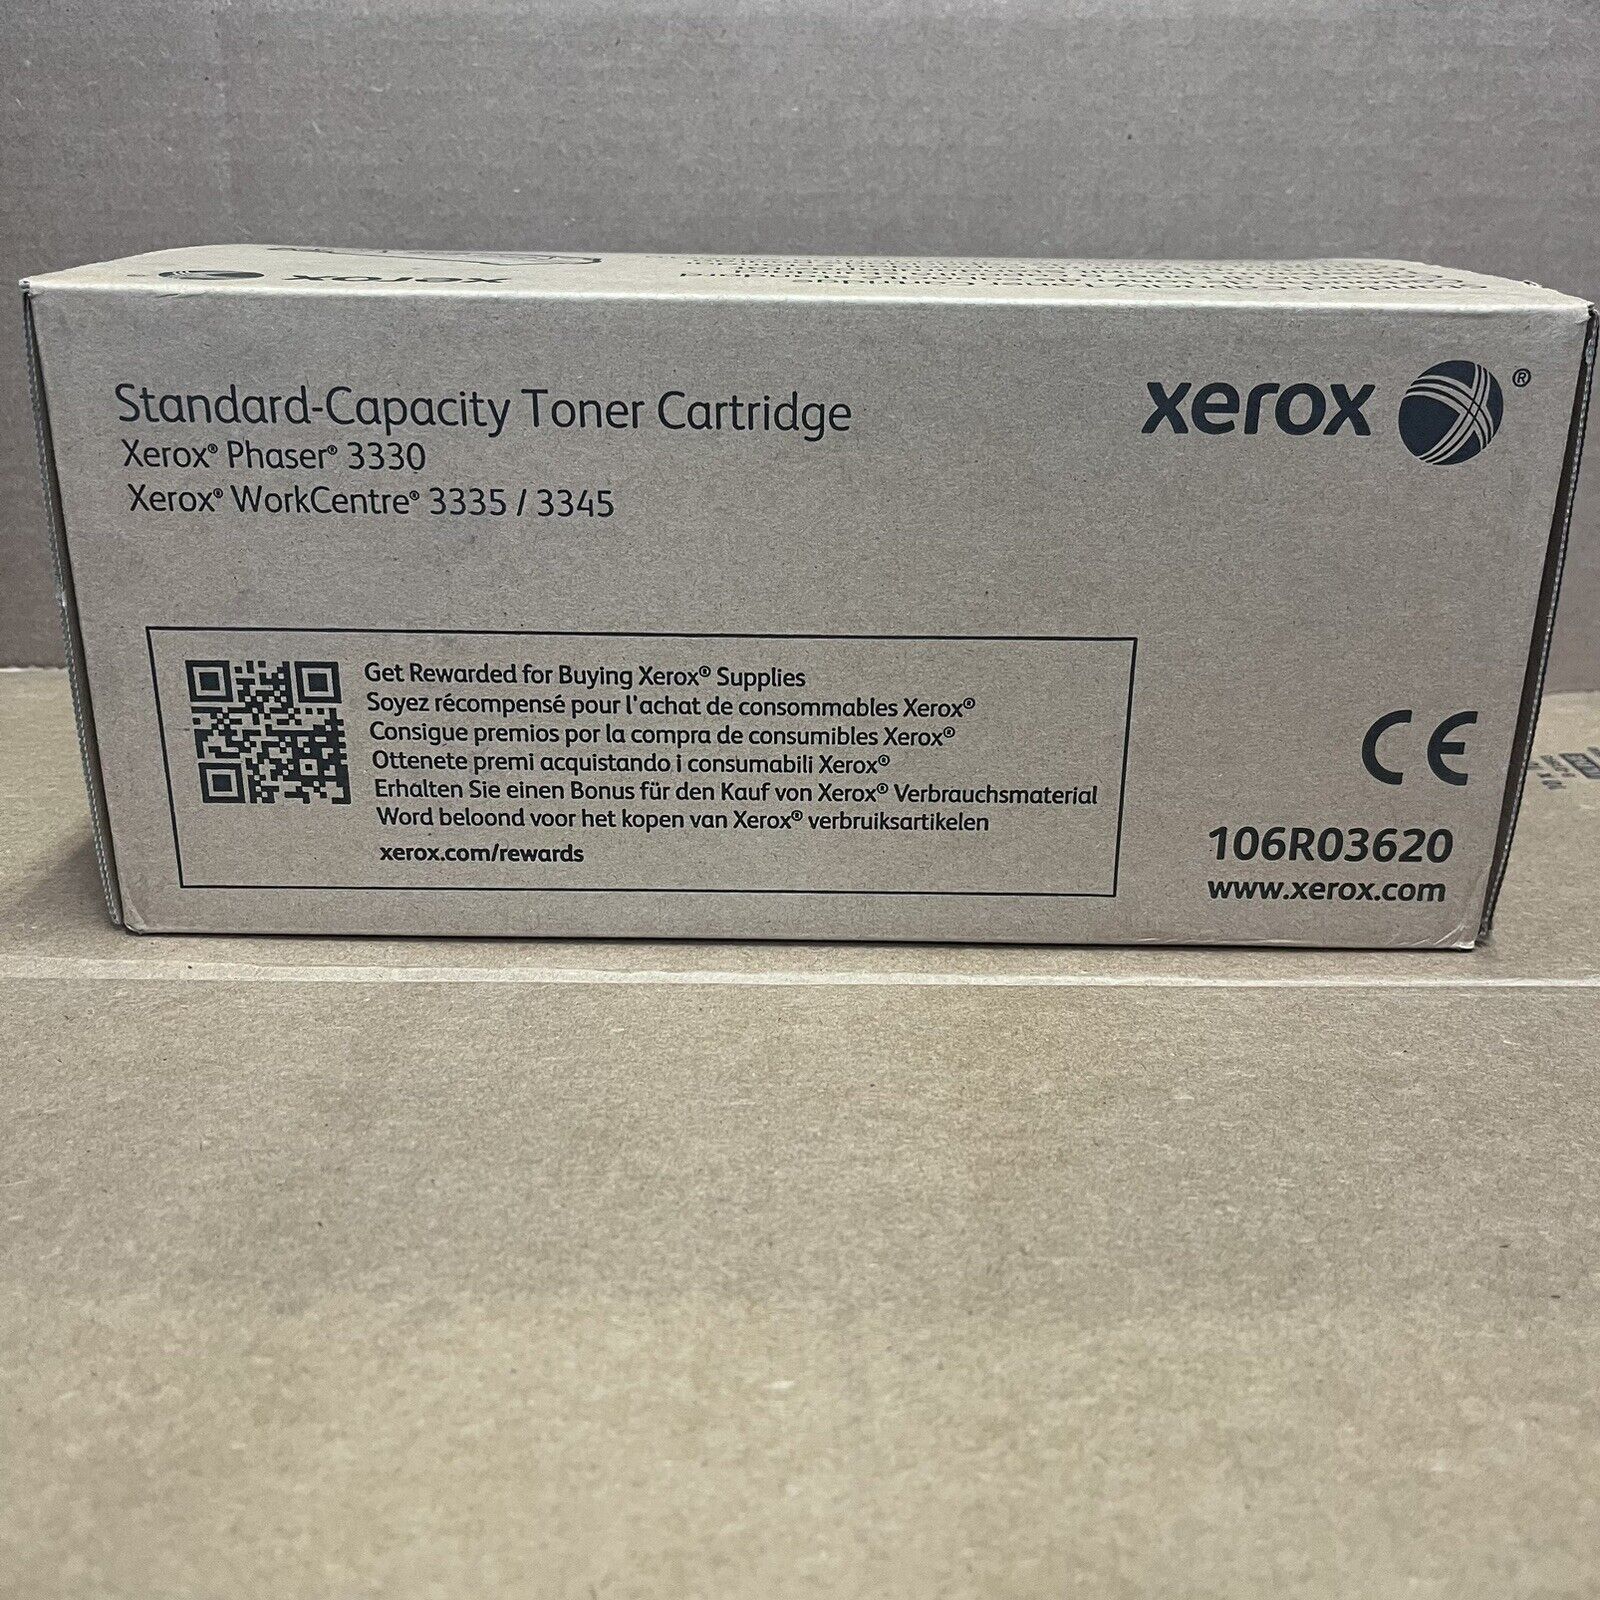 New in box Xerox Phaser 3330 Workcentre Original Toner Cartridge Black 106R03620